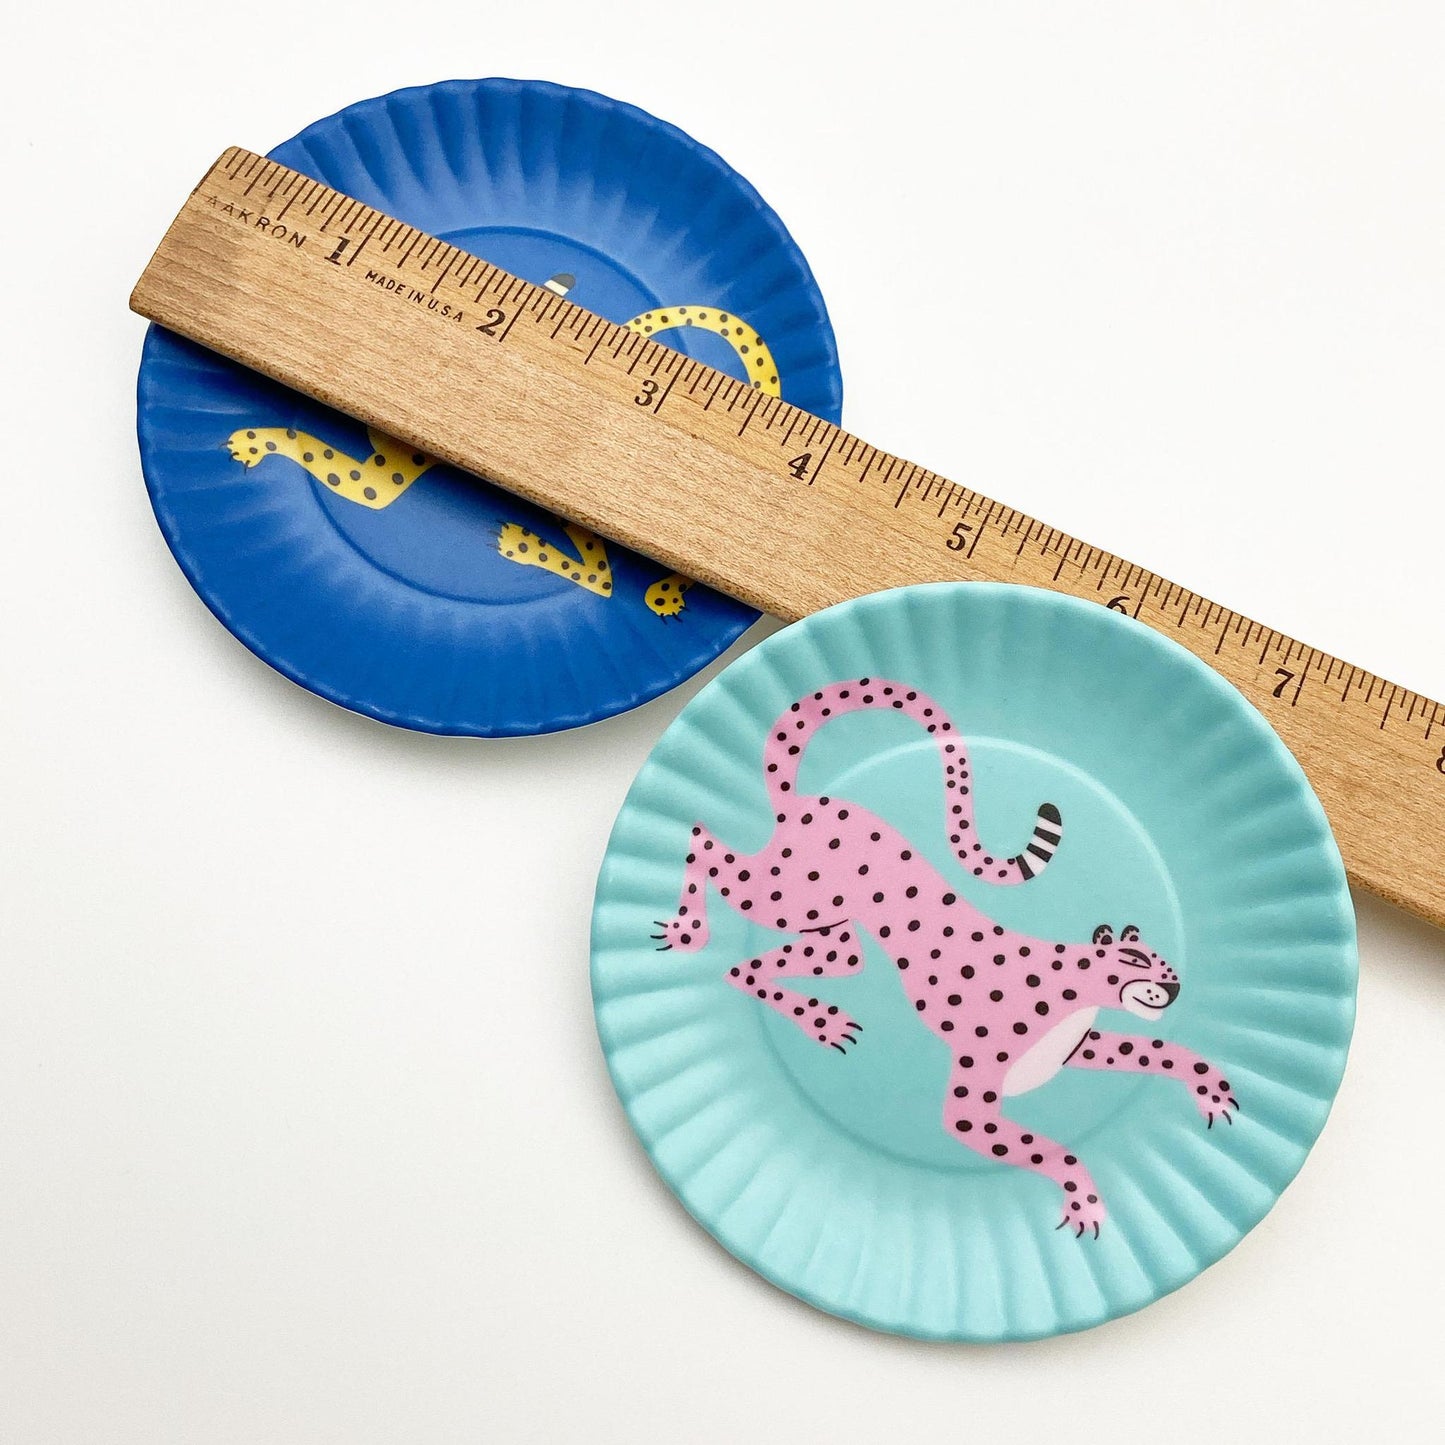 Coaster/Tidbit Tray - Melamine "Paper Plate" - Leopard on Blue